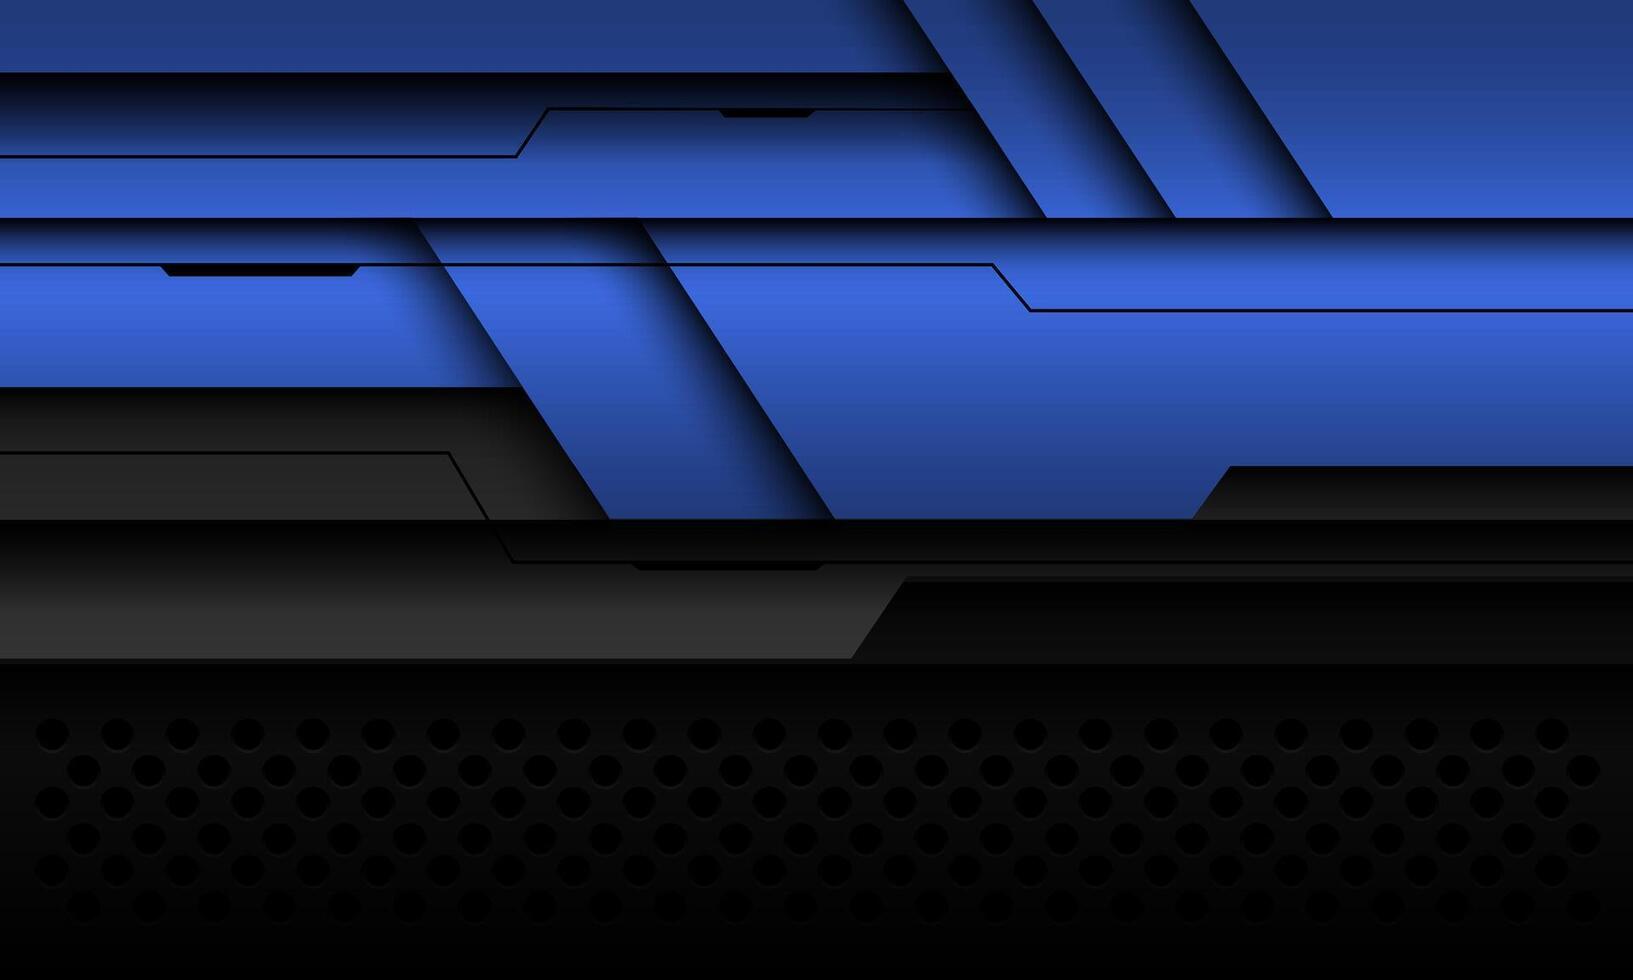 abstract metalen blauw licht grijs cyber zwart lijn ontwerp modern futuristische technologie achtergrond vector